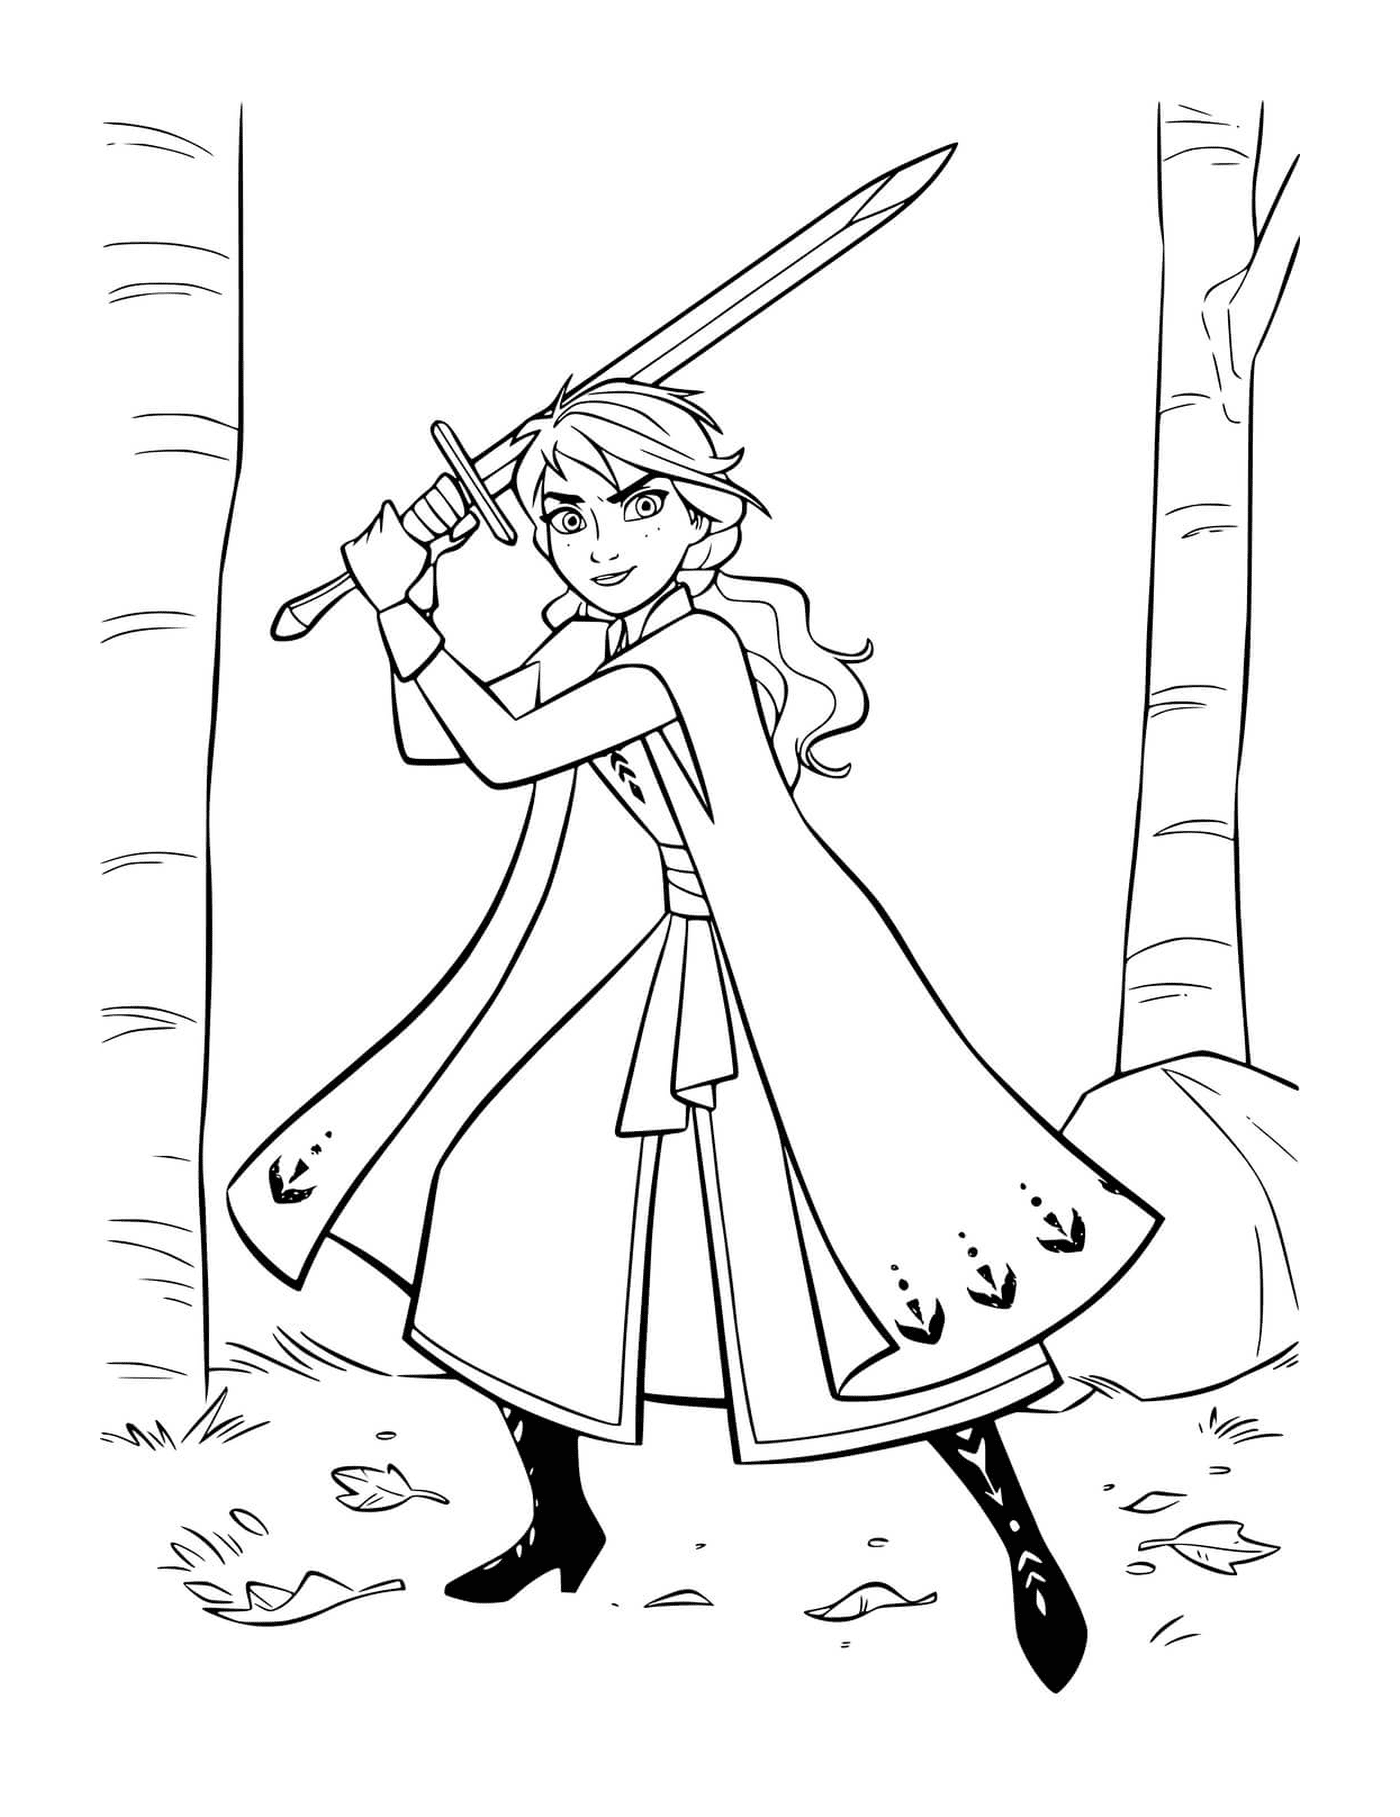  Anna defends kingdom with sword 